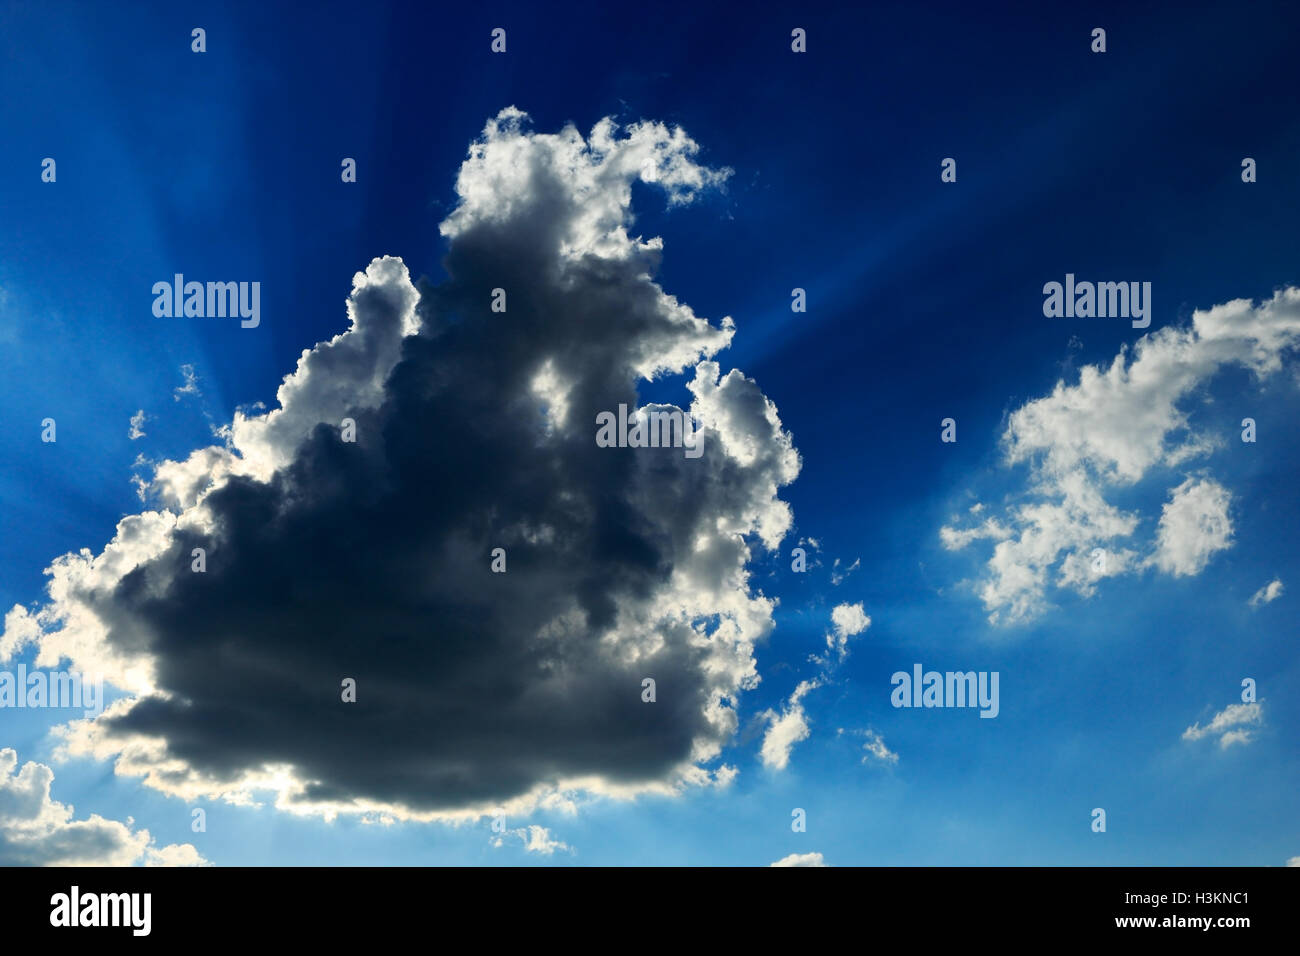 Blue sky with sunbeams shining through the dark cloud. Stock Photo